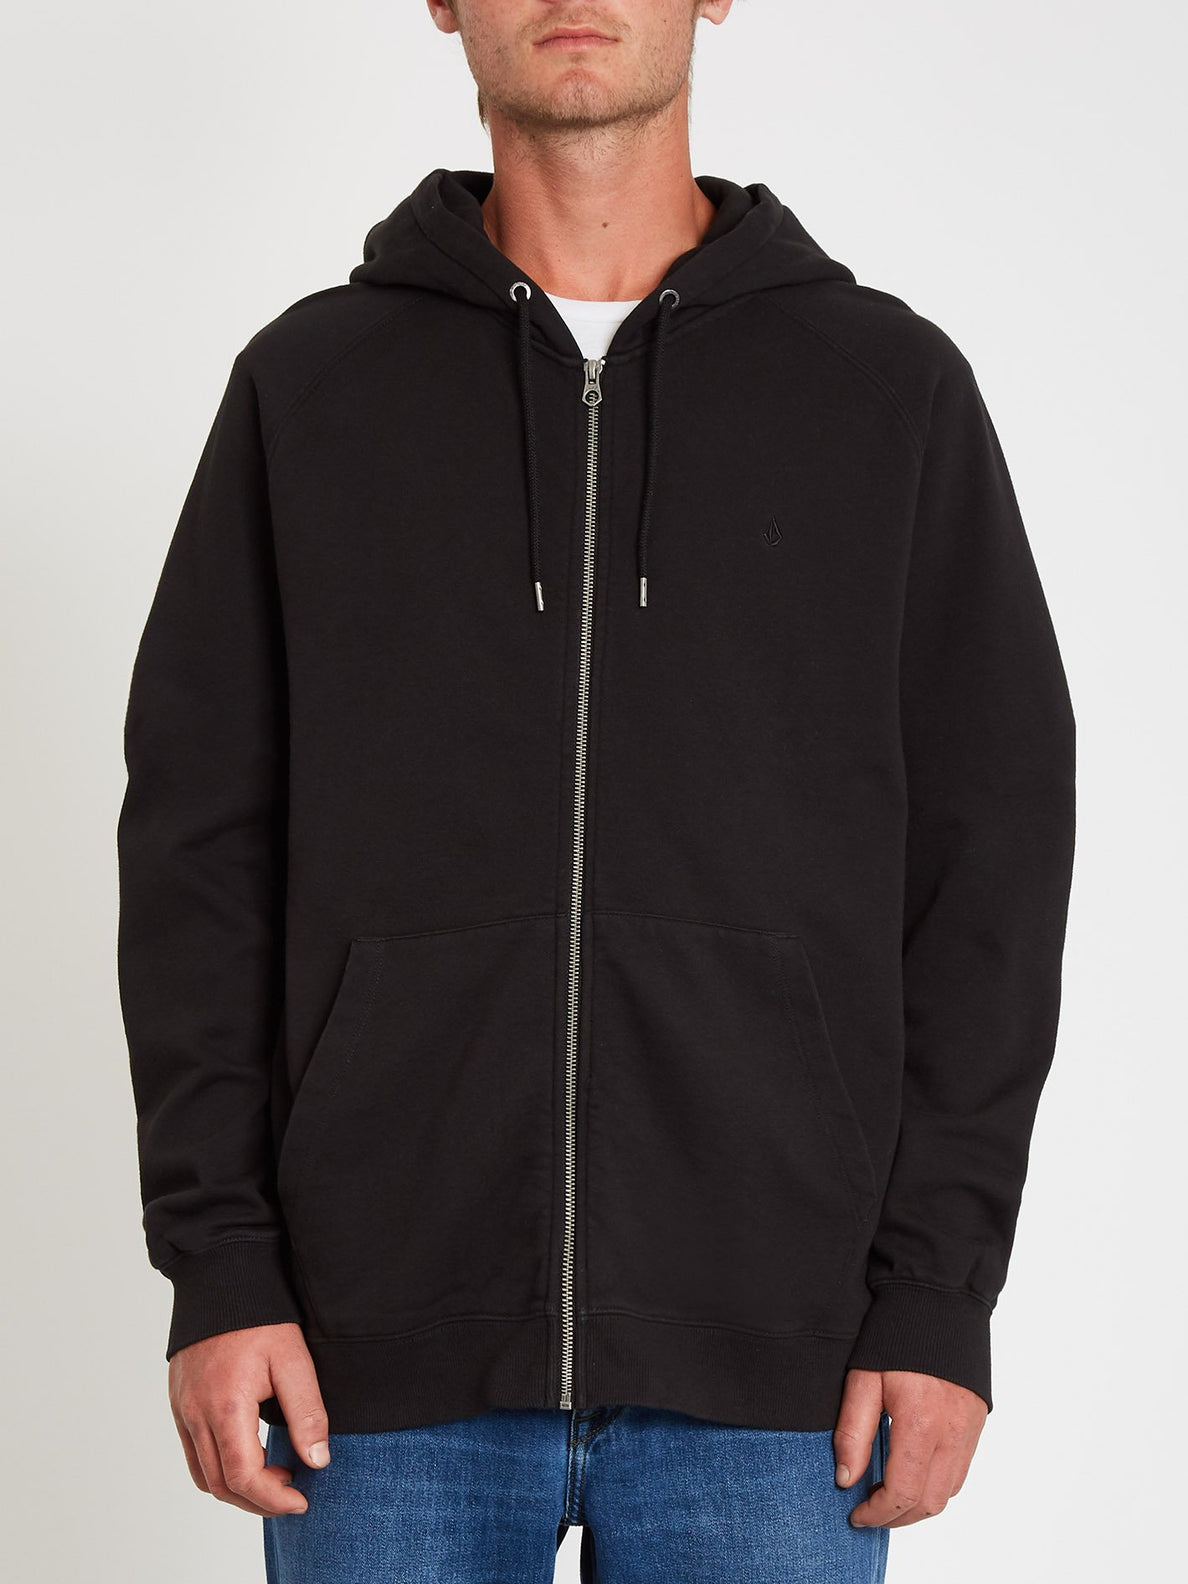 Freeleven Zip Sweatshirt - Black (A4812102_BLK) [F]